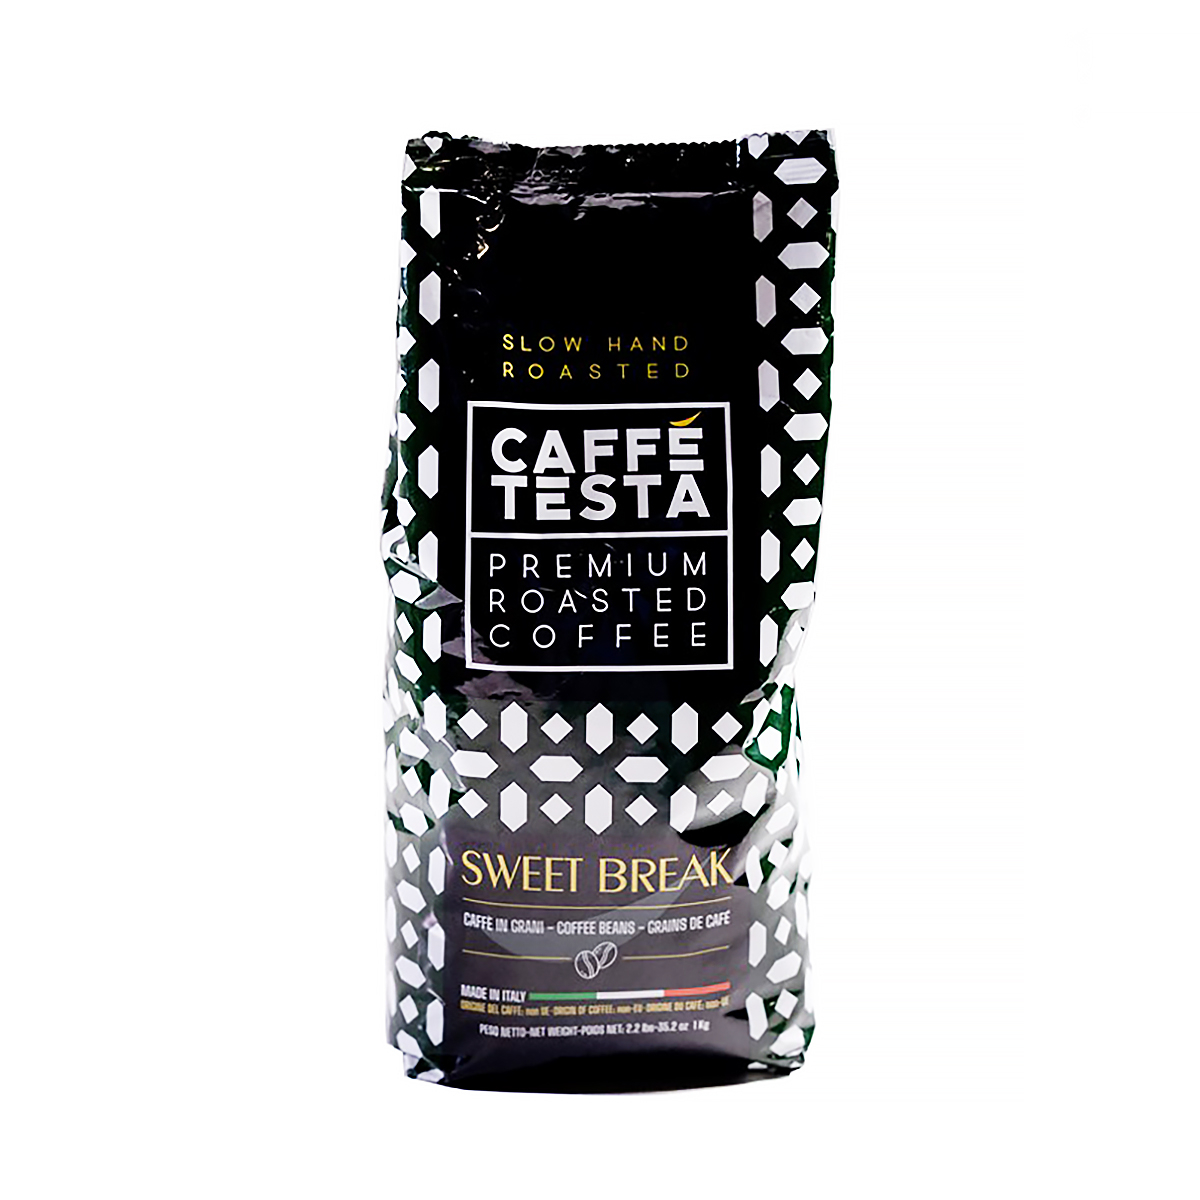 Кофе в зернах Caffe Testa Sweet Break, 1 кг кофе в зернах caffe don cortez gold blend 1 кг